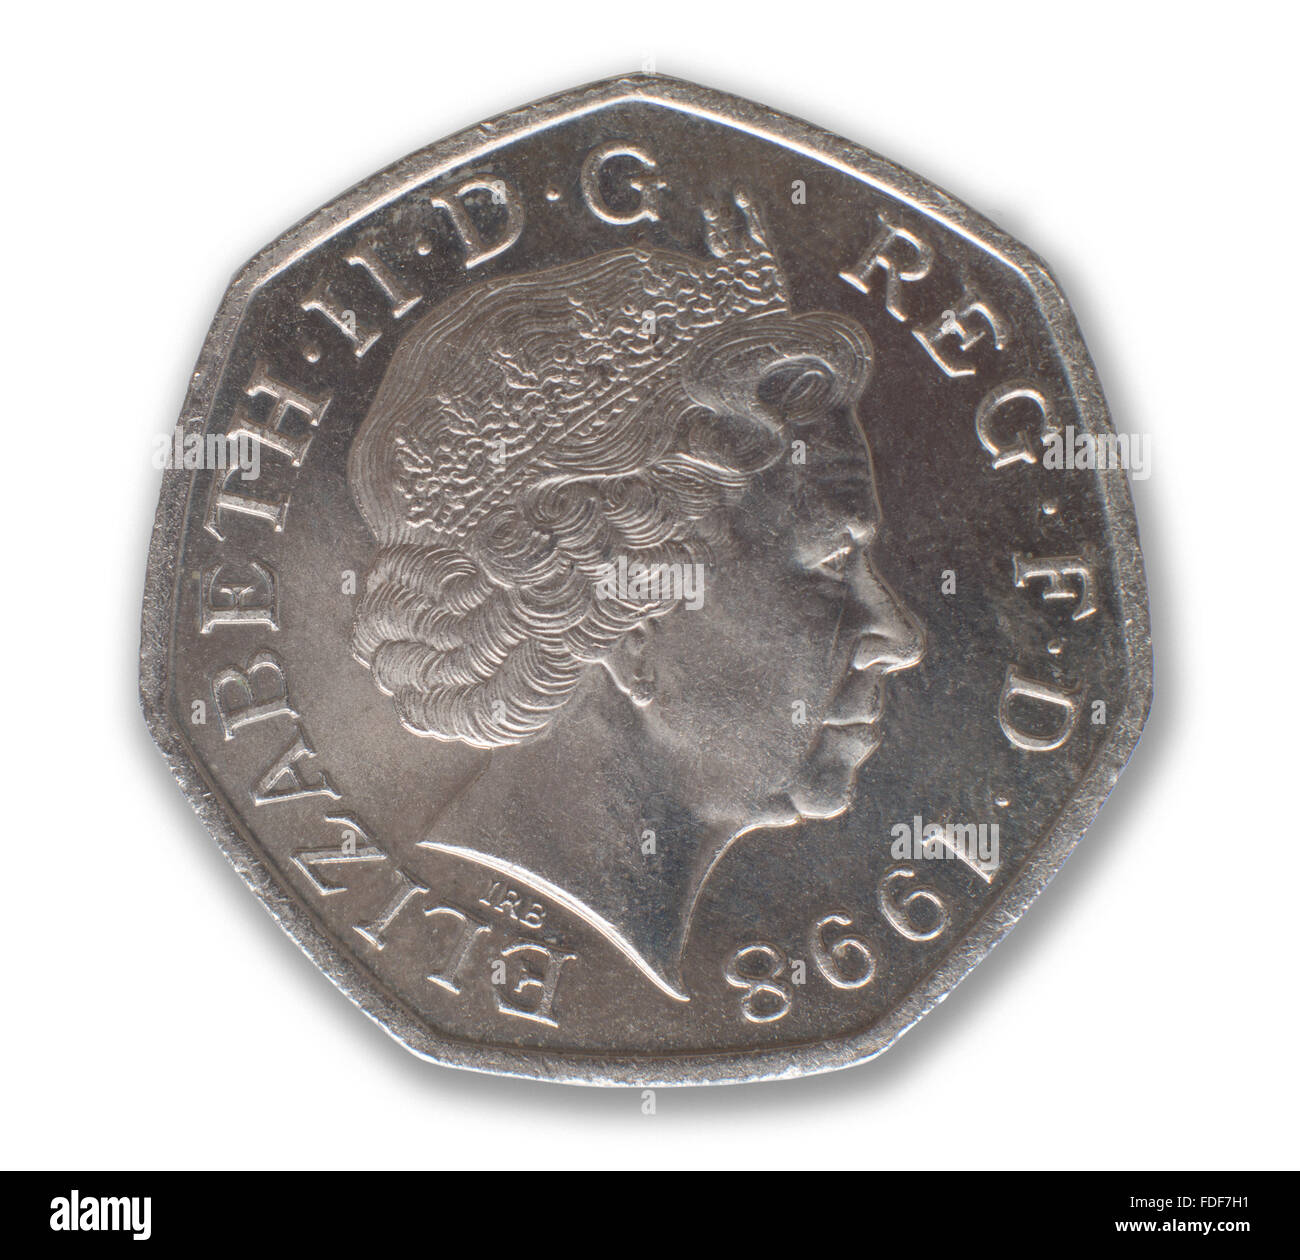 Obverse of commemorative fifty pence piece 25th Anniversary of UK EU membership 1973 1998 Stock Photo